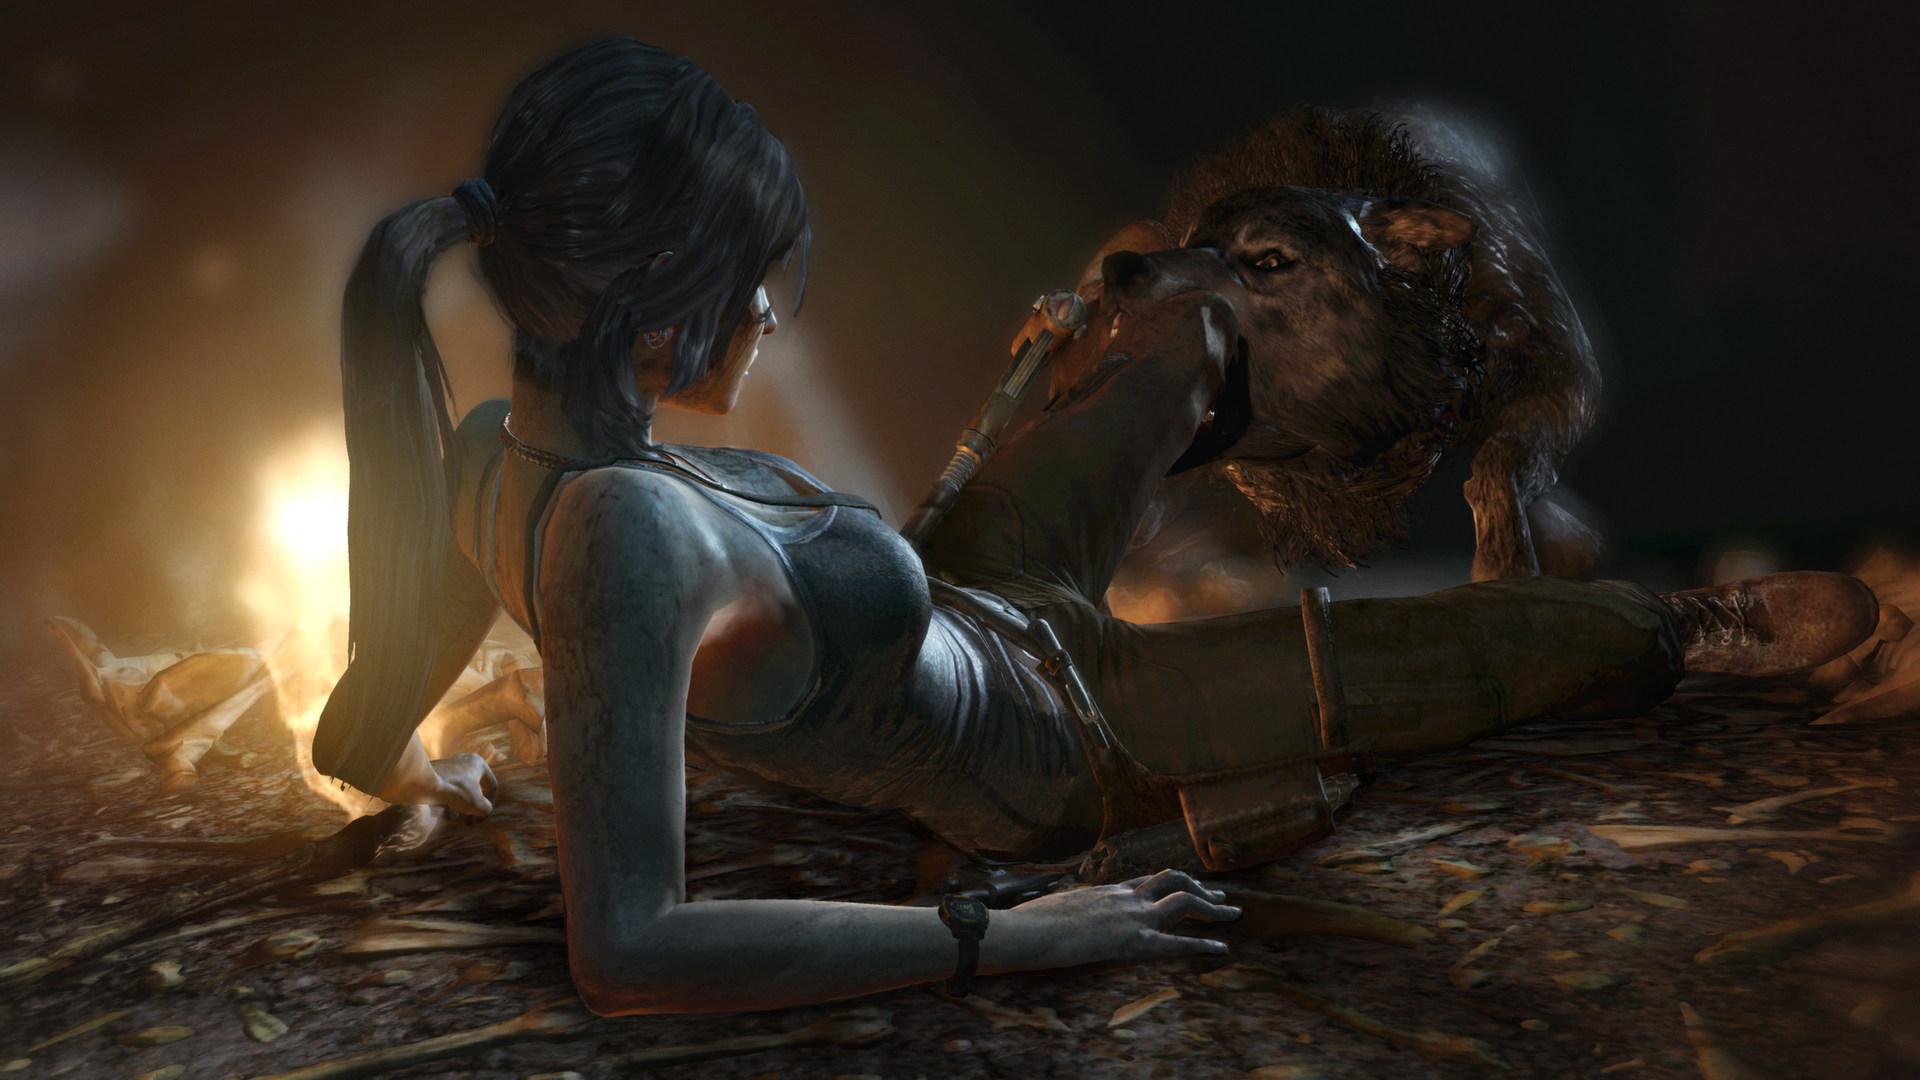 Lara intense tomb raider